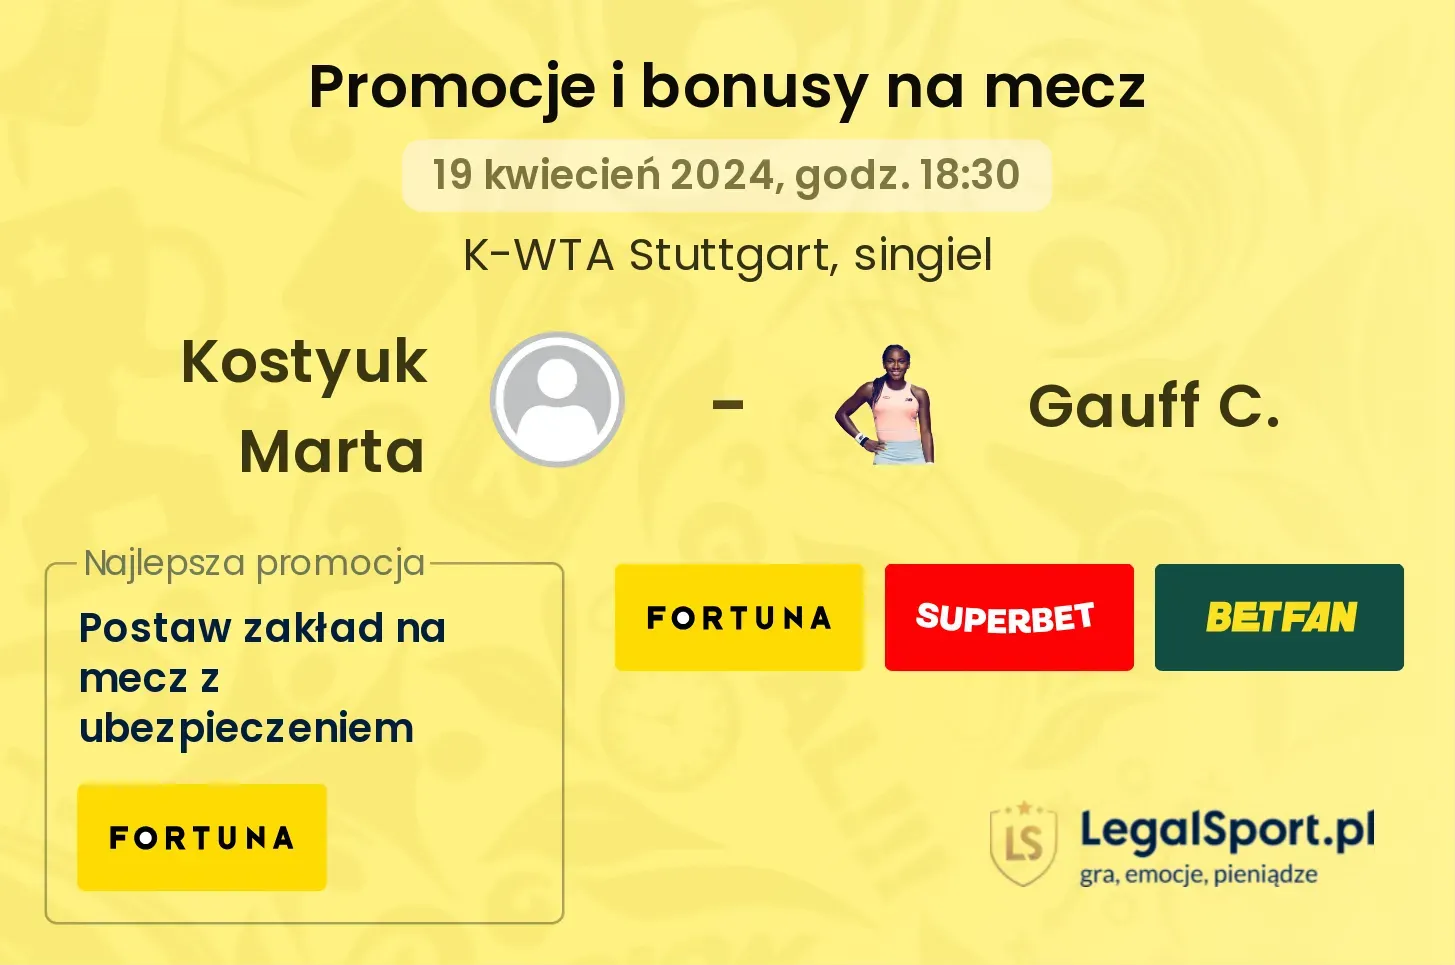 Kostyuk Marta - Gauff C. promocje bonusy na mecz